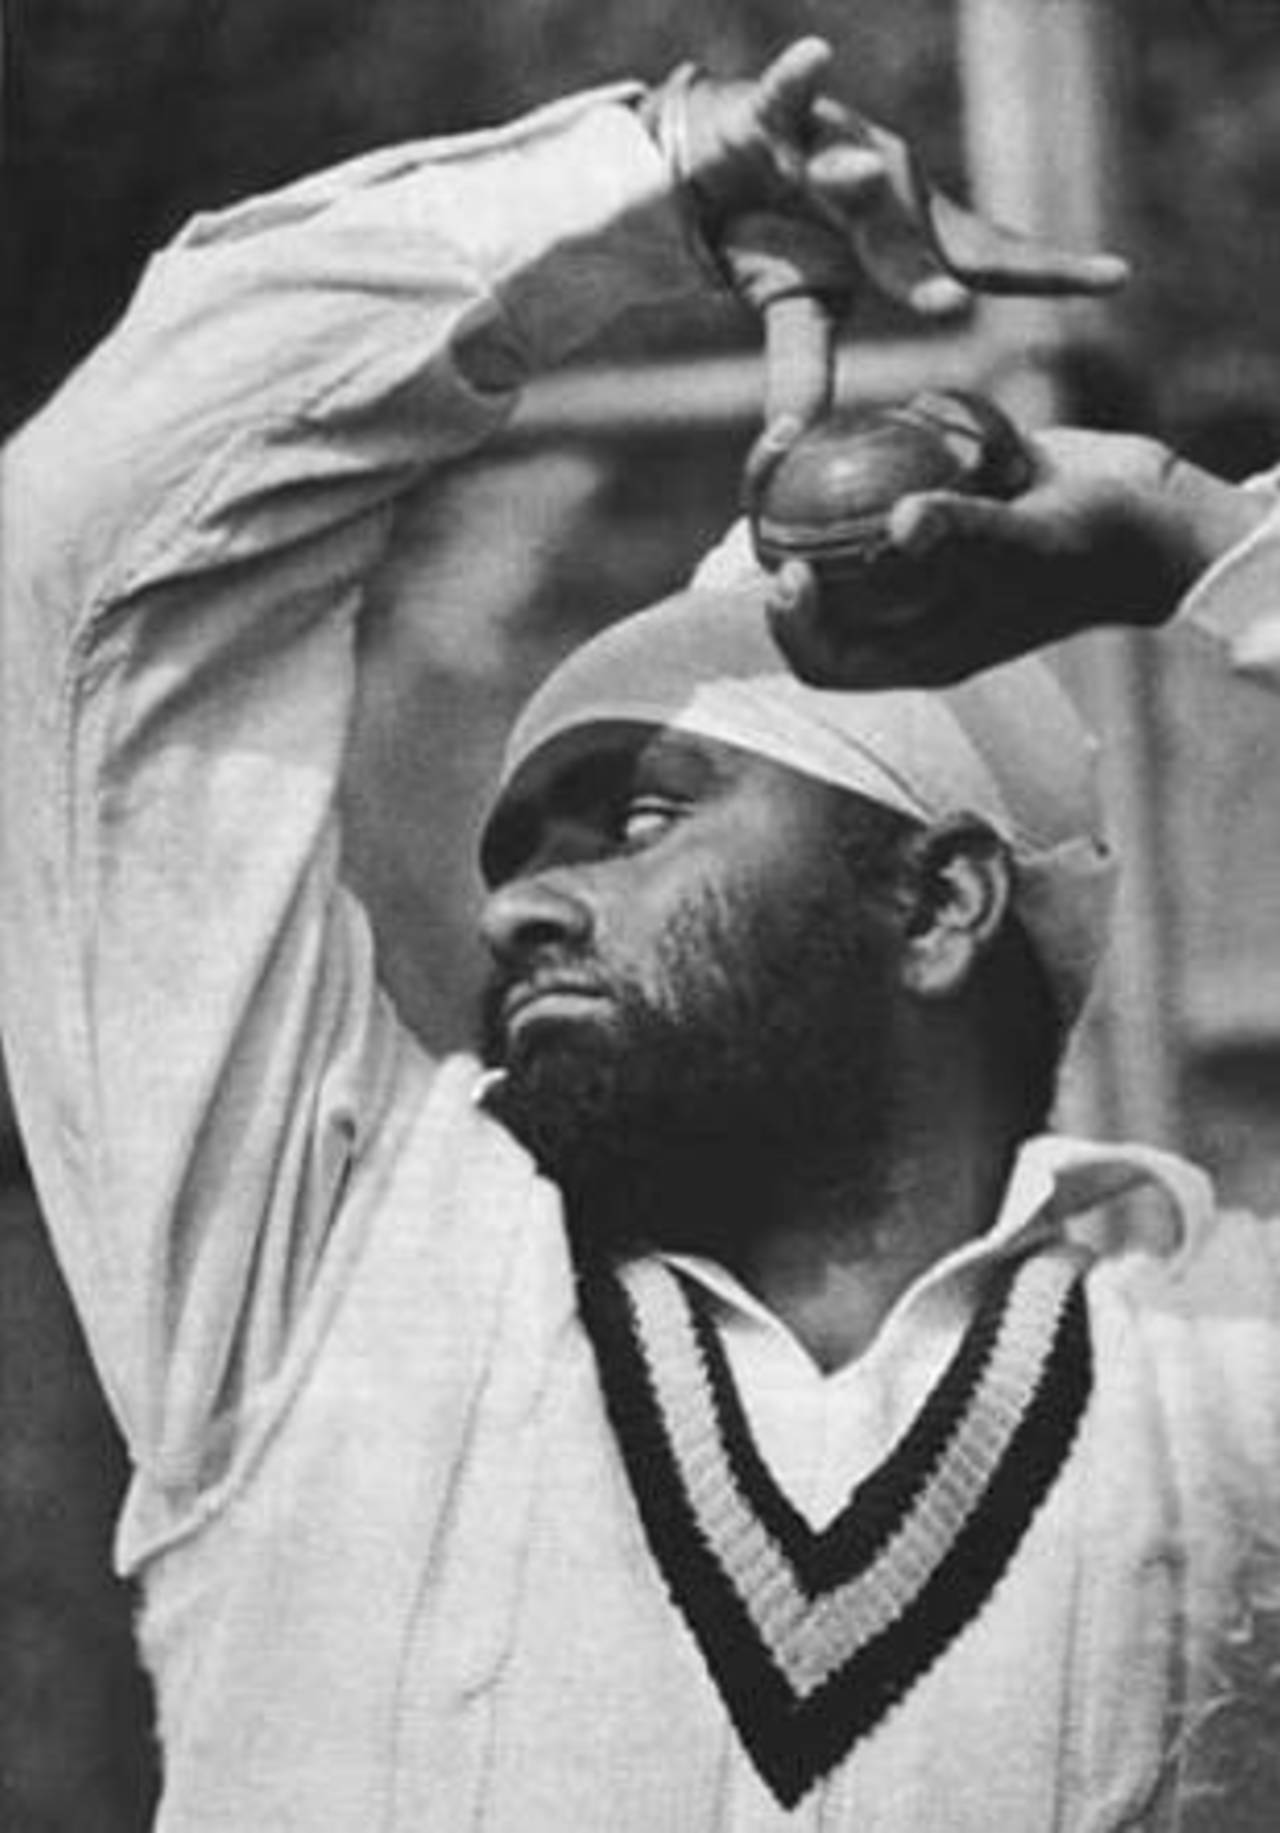 Ken Kelly's photograph of Bishan Bedi's action&nbsp;&nbsp;&bull;&nbsp;&nbsp;Wisden Cricket Monthly